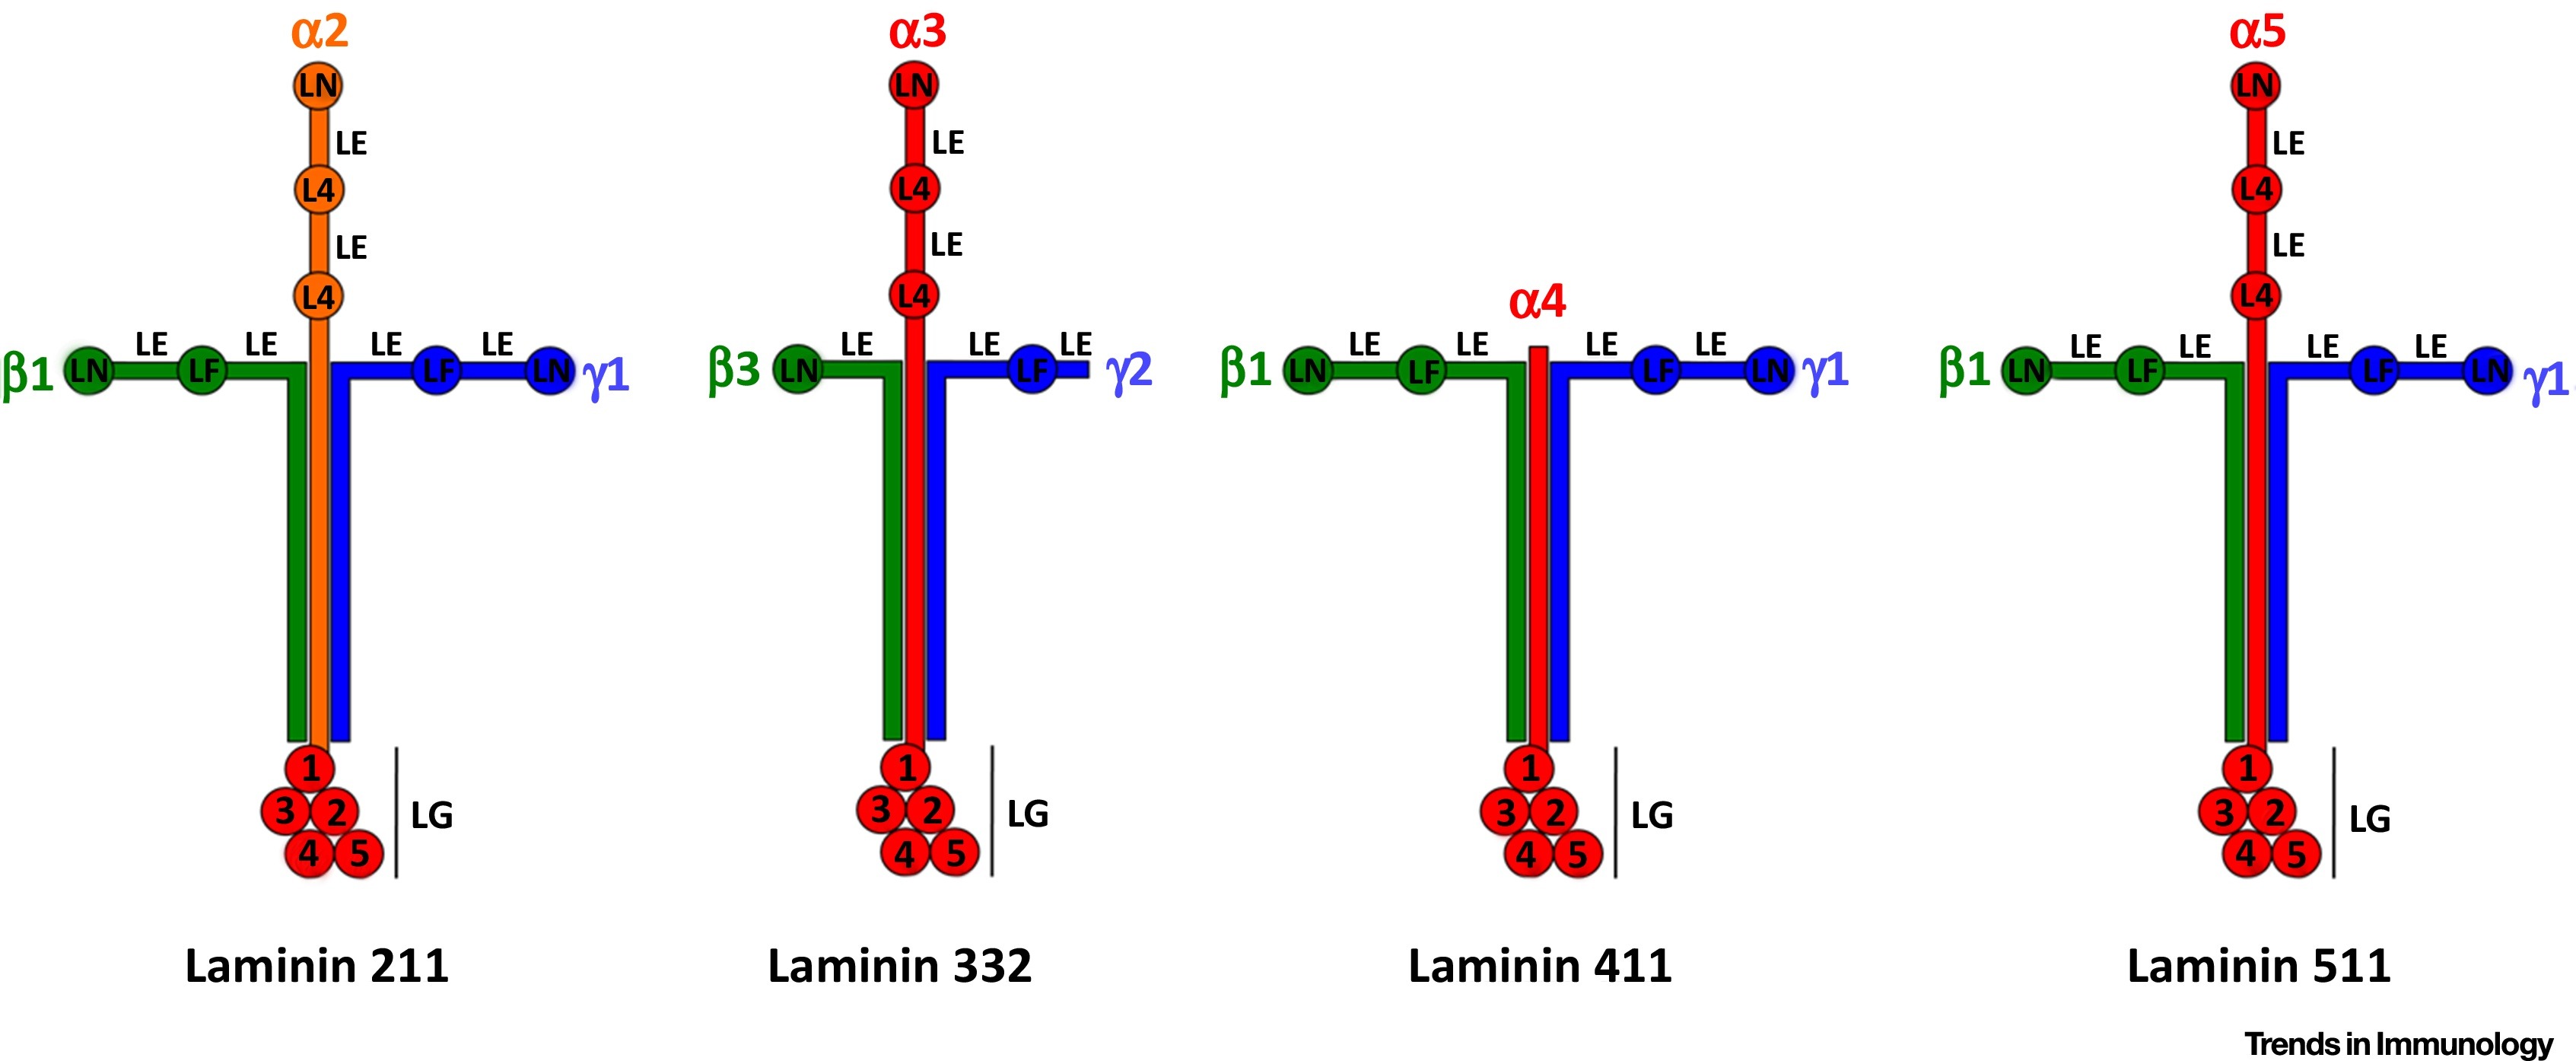 Laminin 511 is a target antigen in autoimmune pancreatitis...